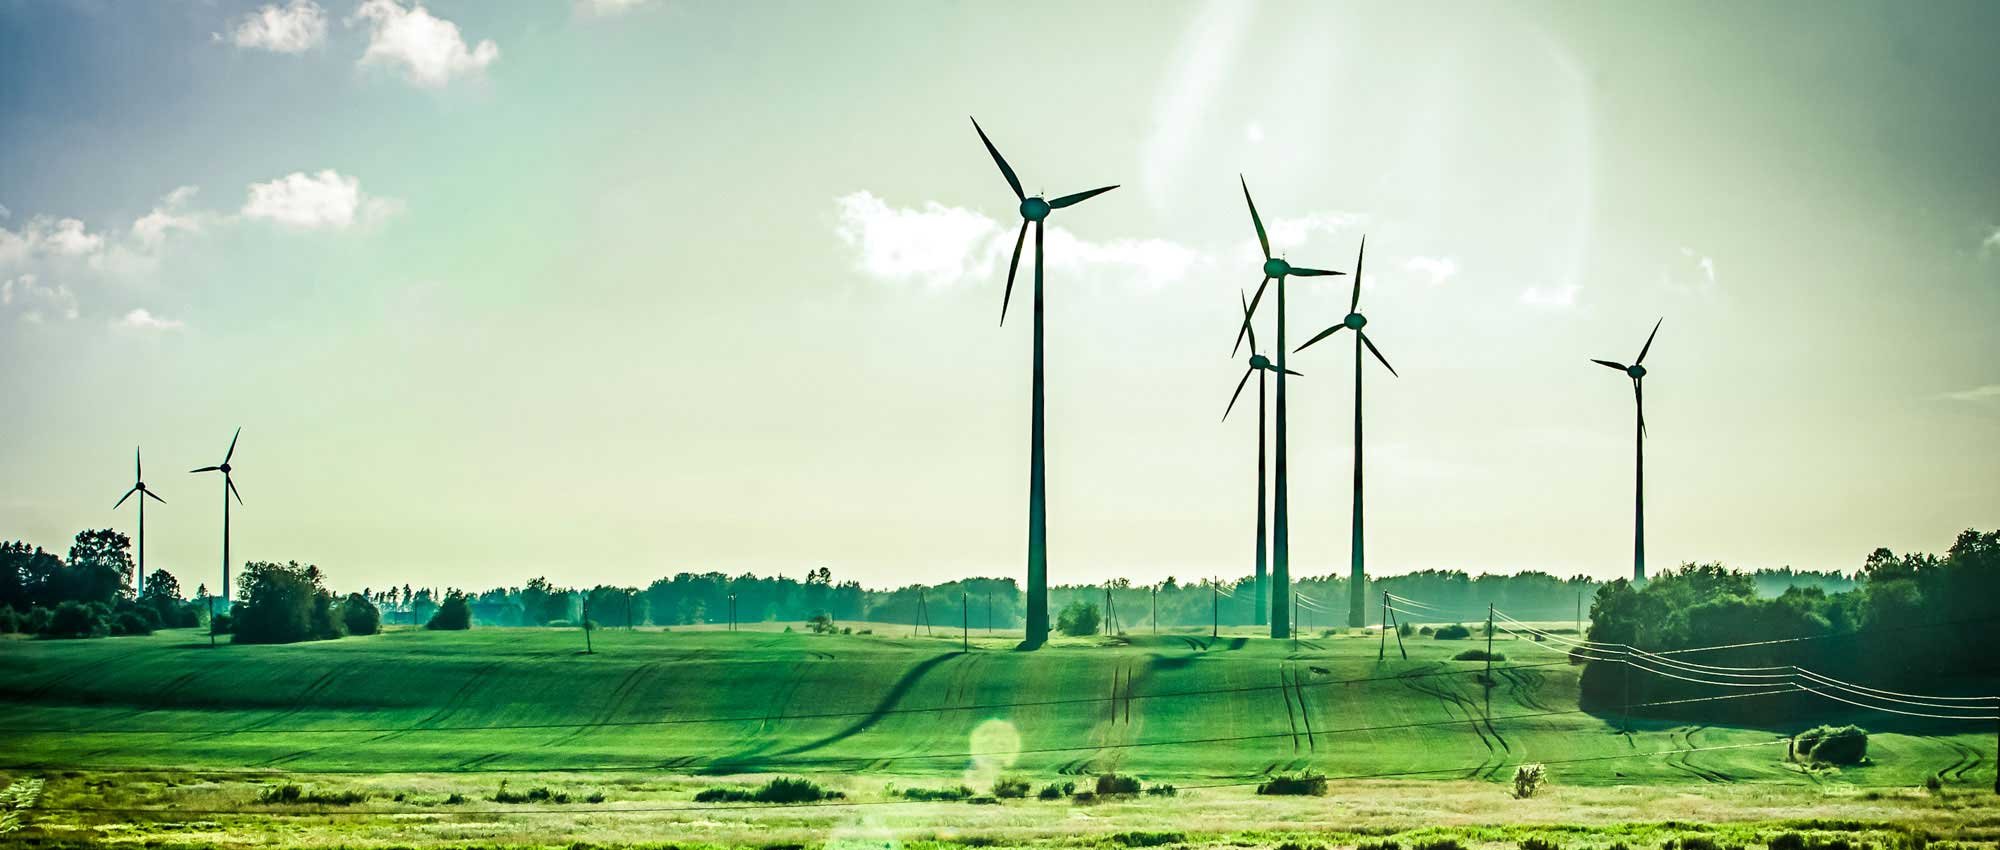 More information about "Γερμανία: Οι ανανεώσιμες πηγές ξεπέρασαν τον άνθρακα ως βασική πηγή ενέργειας"